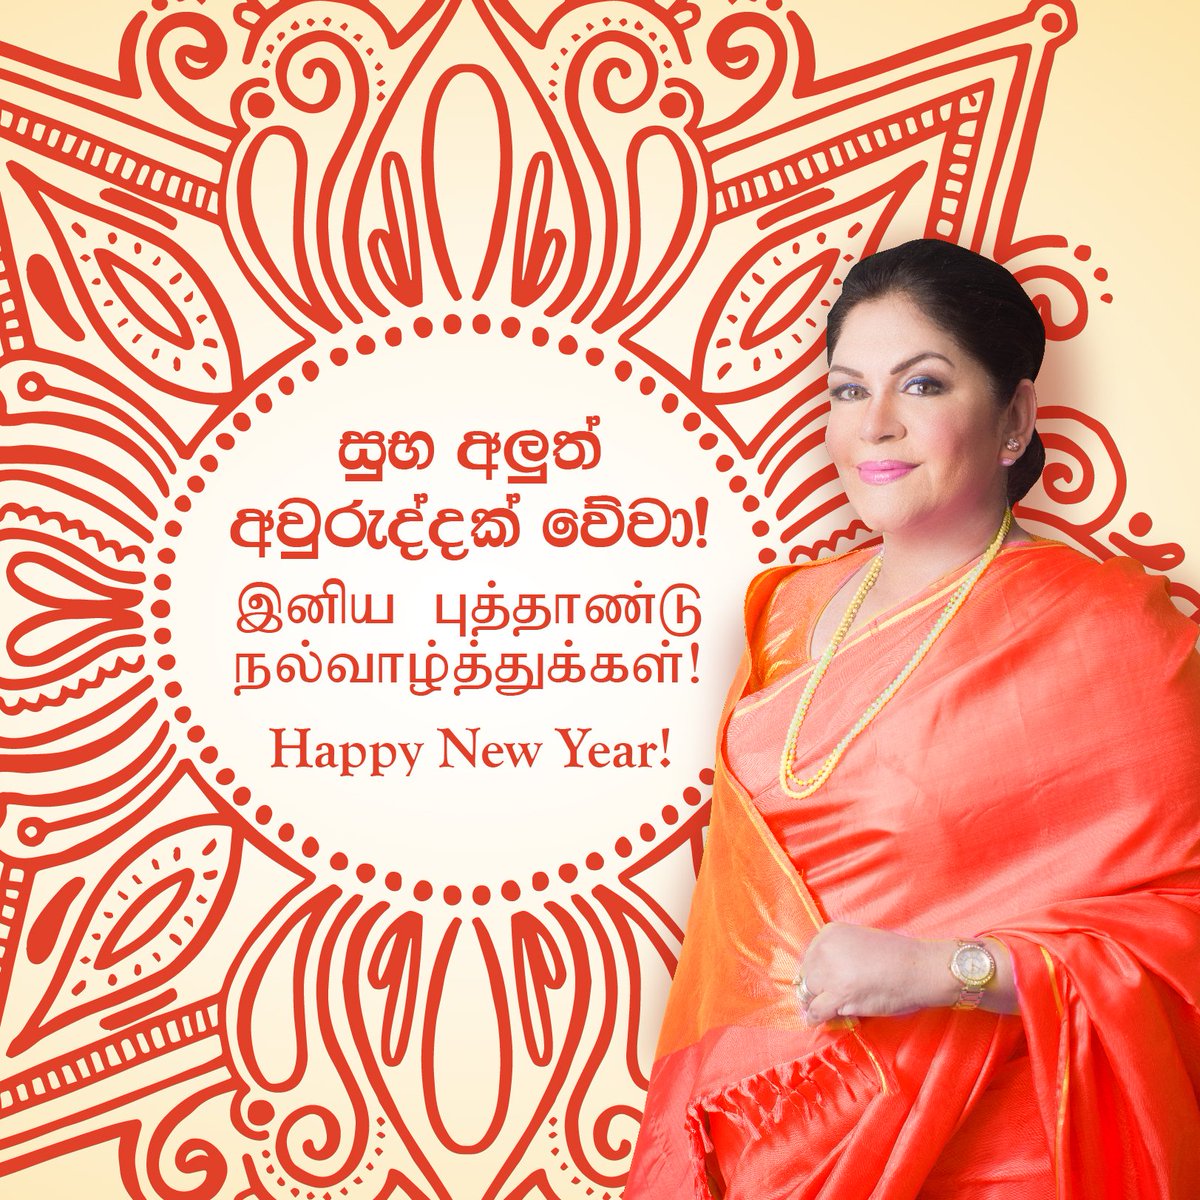 #Newyear #Newyears2018 #Happynewyears #RosySenanayake #Colombo #SriLanka #lka